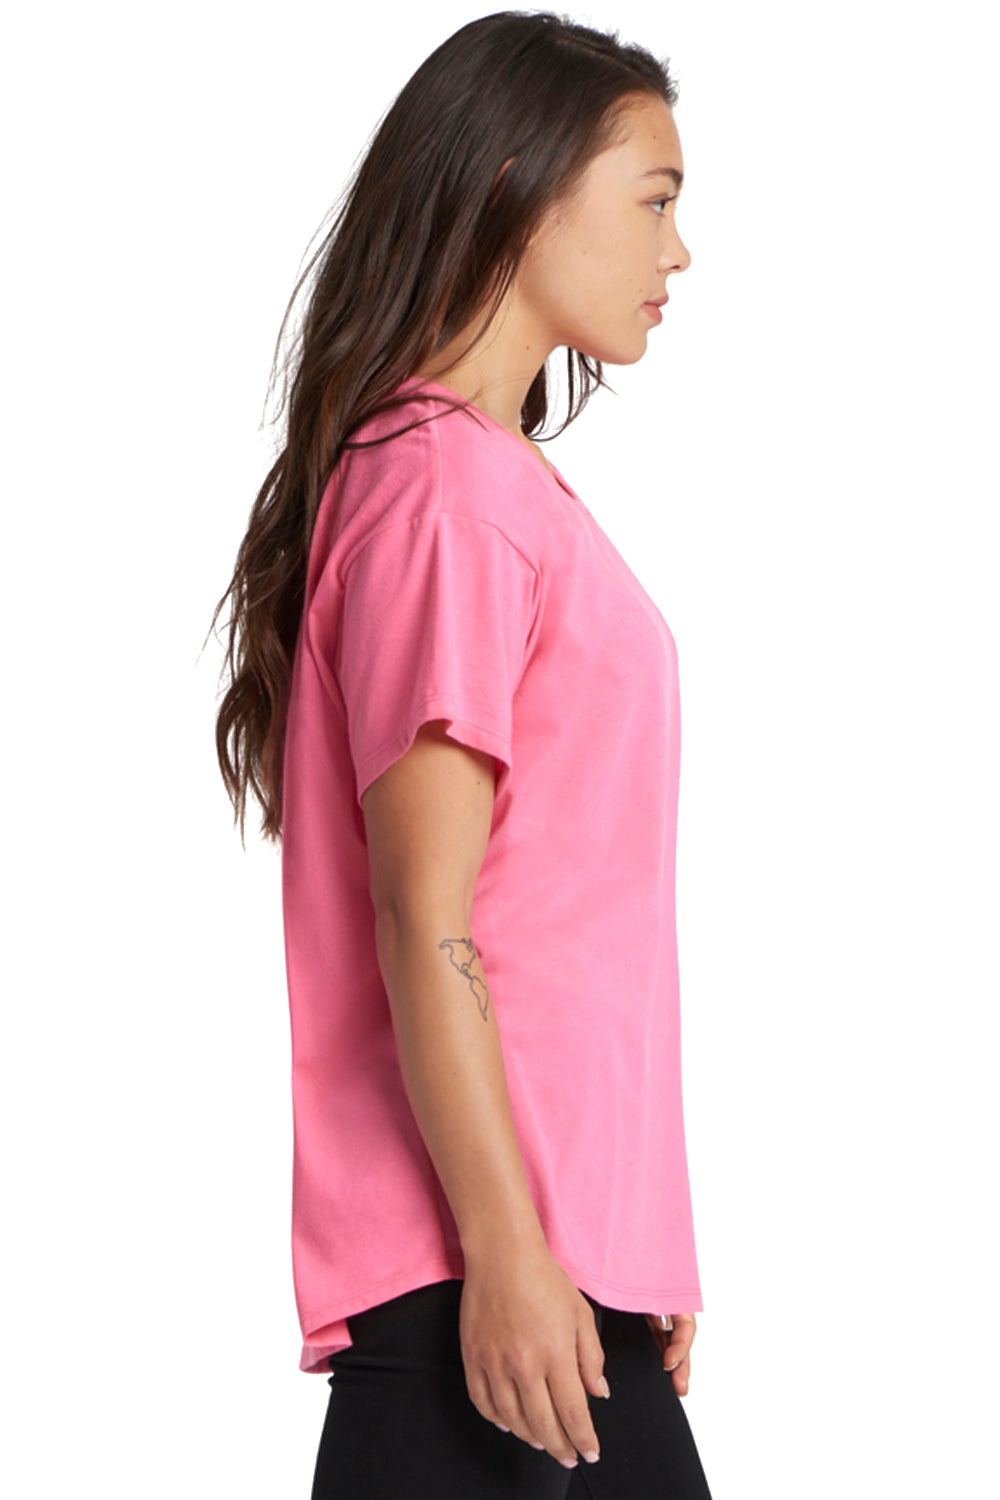 Next Level N1530 Womens Ideal Flow Short Sleeve Crewneck T-Shirt Pink Side